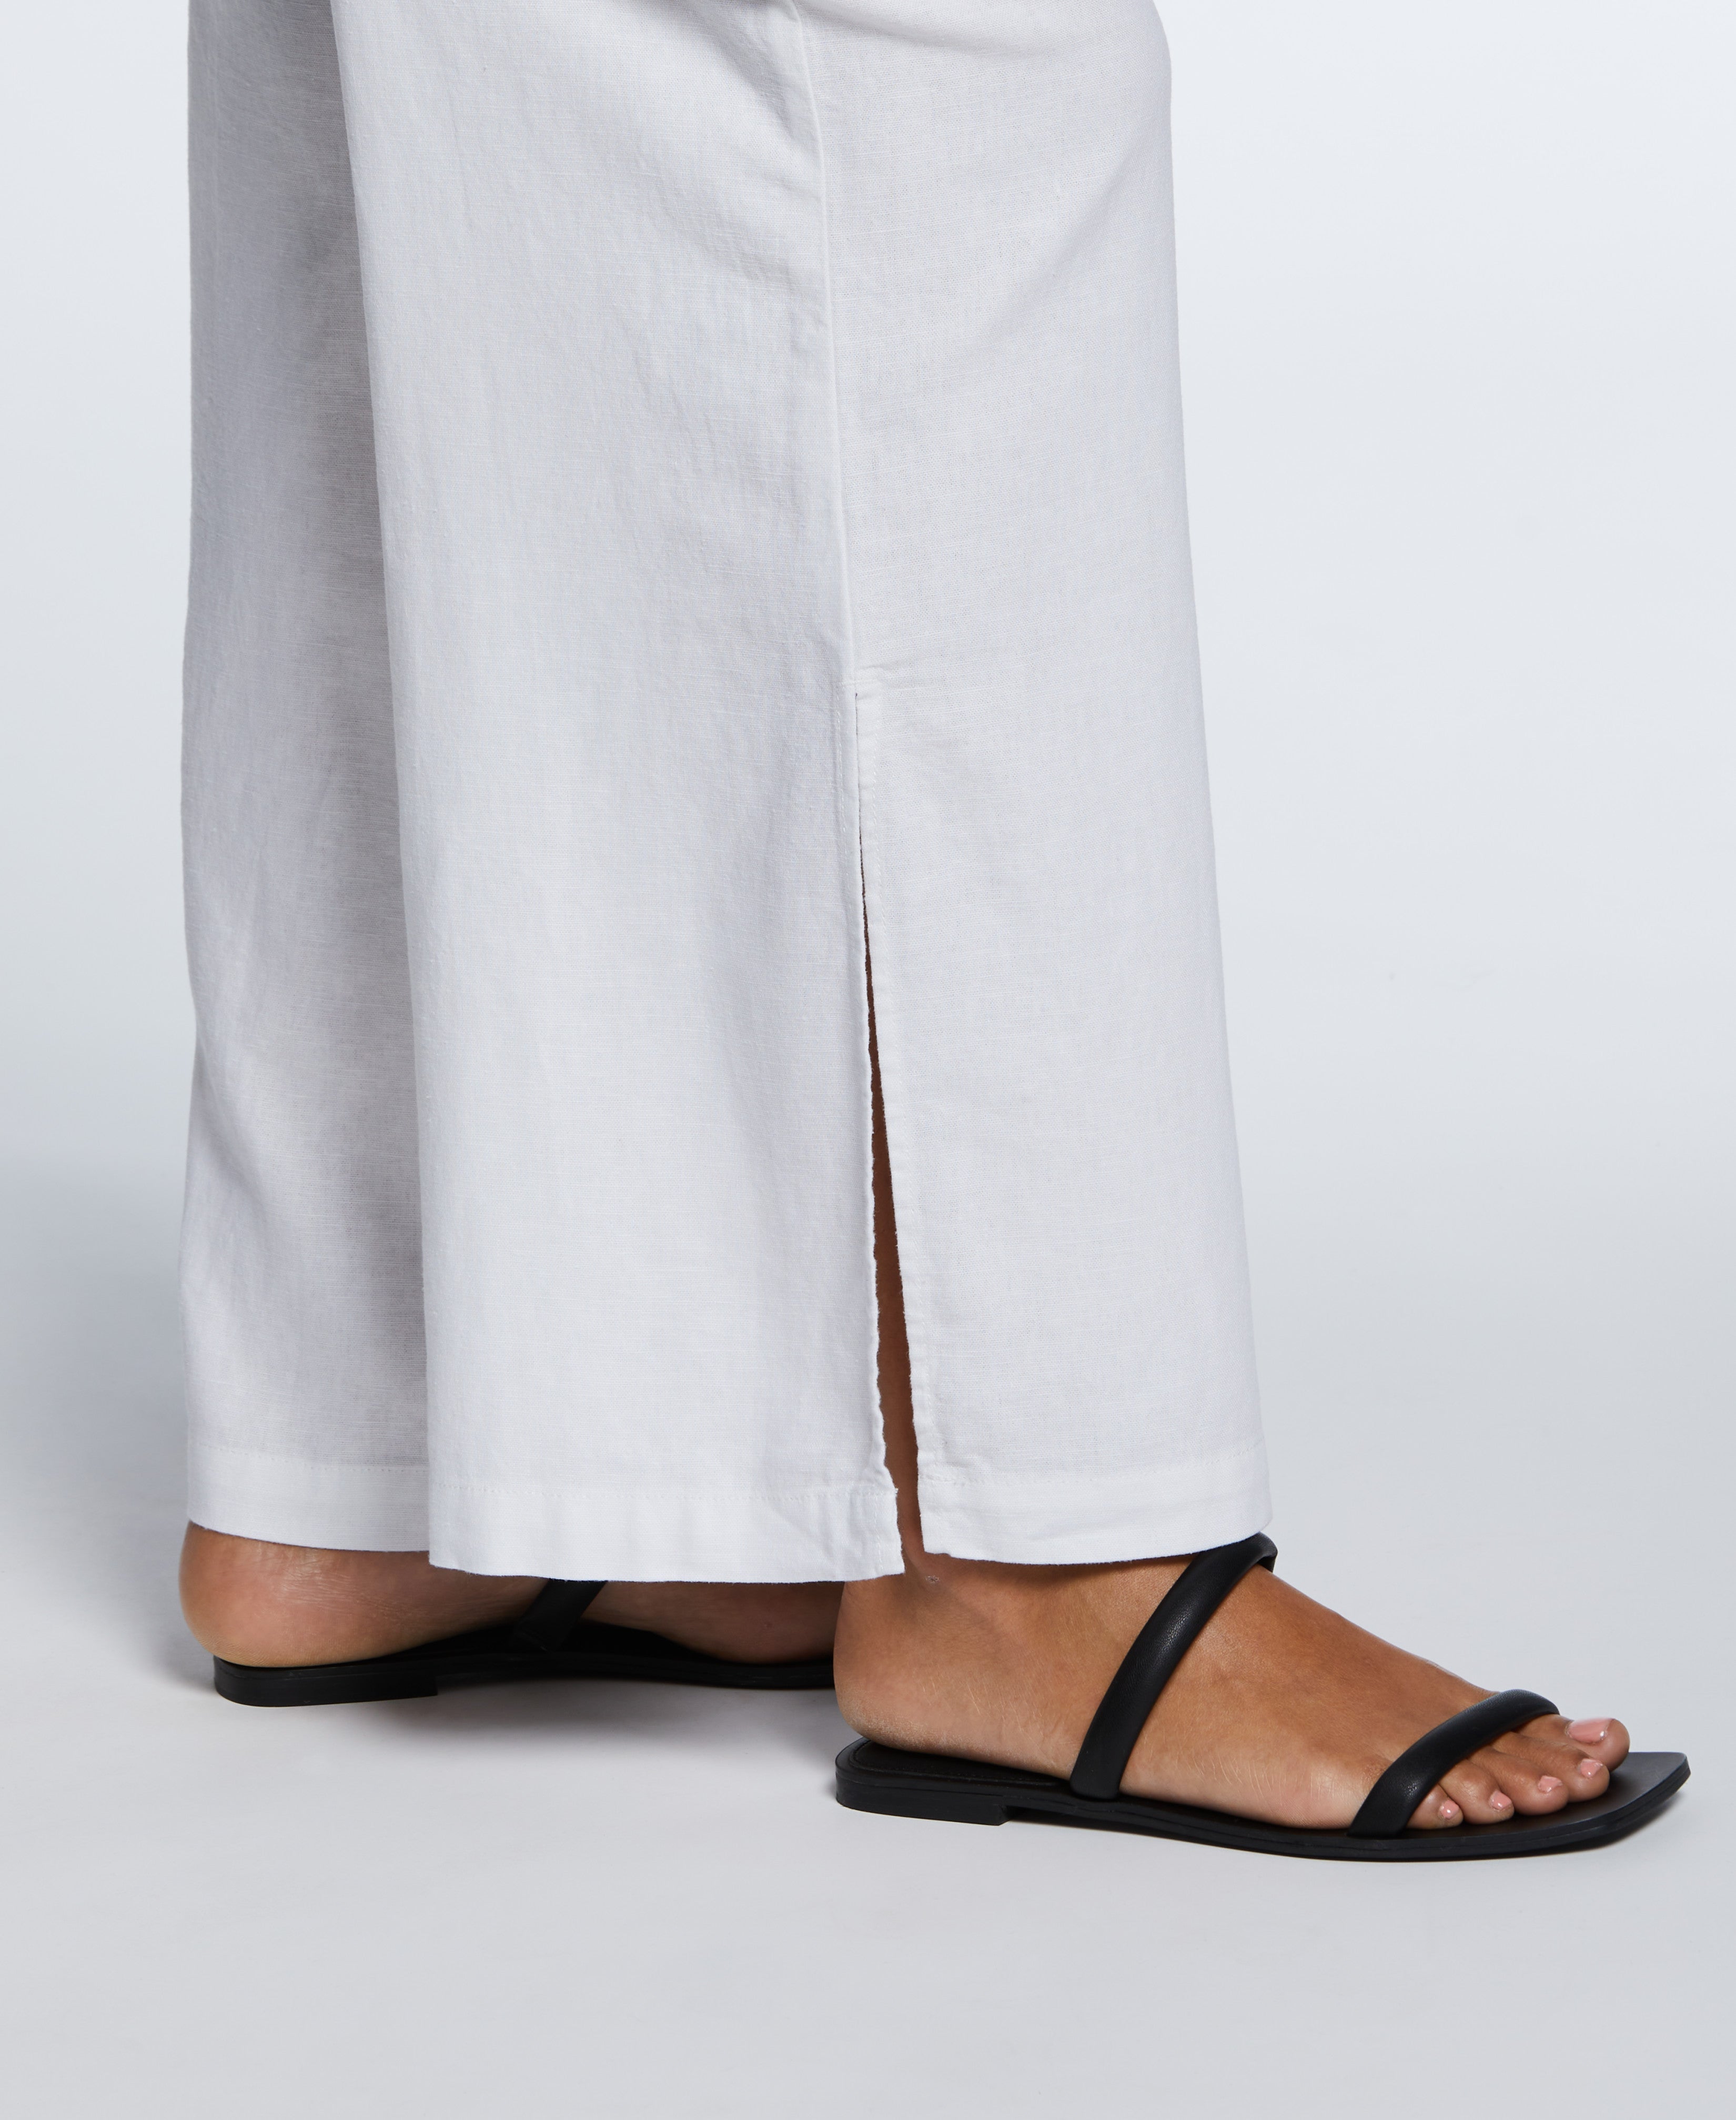 Linen Pants Reg and Curvy – Wildlee